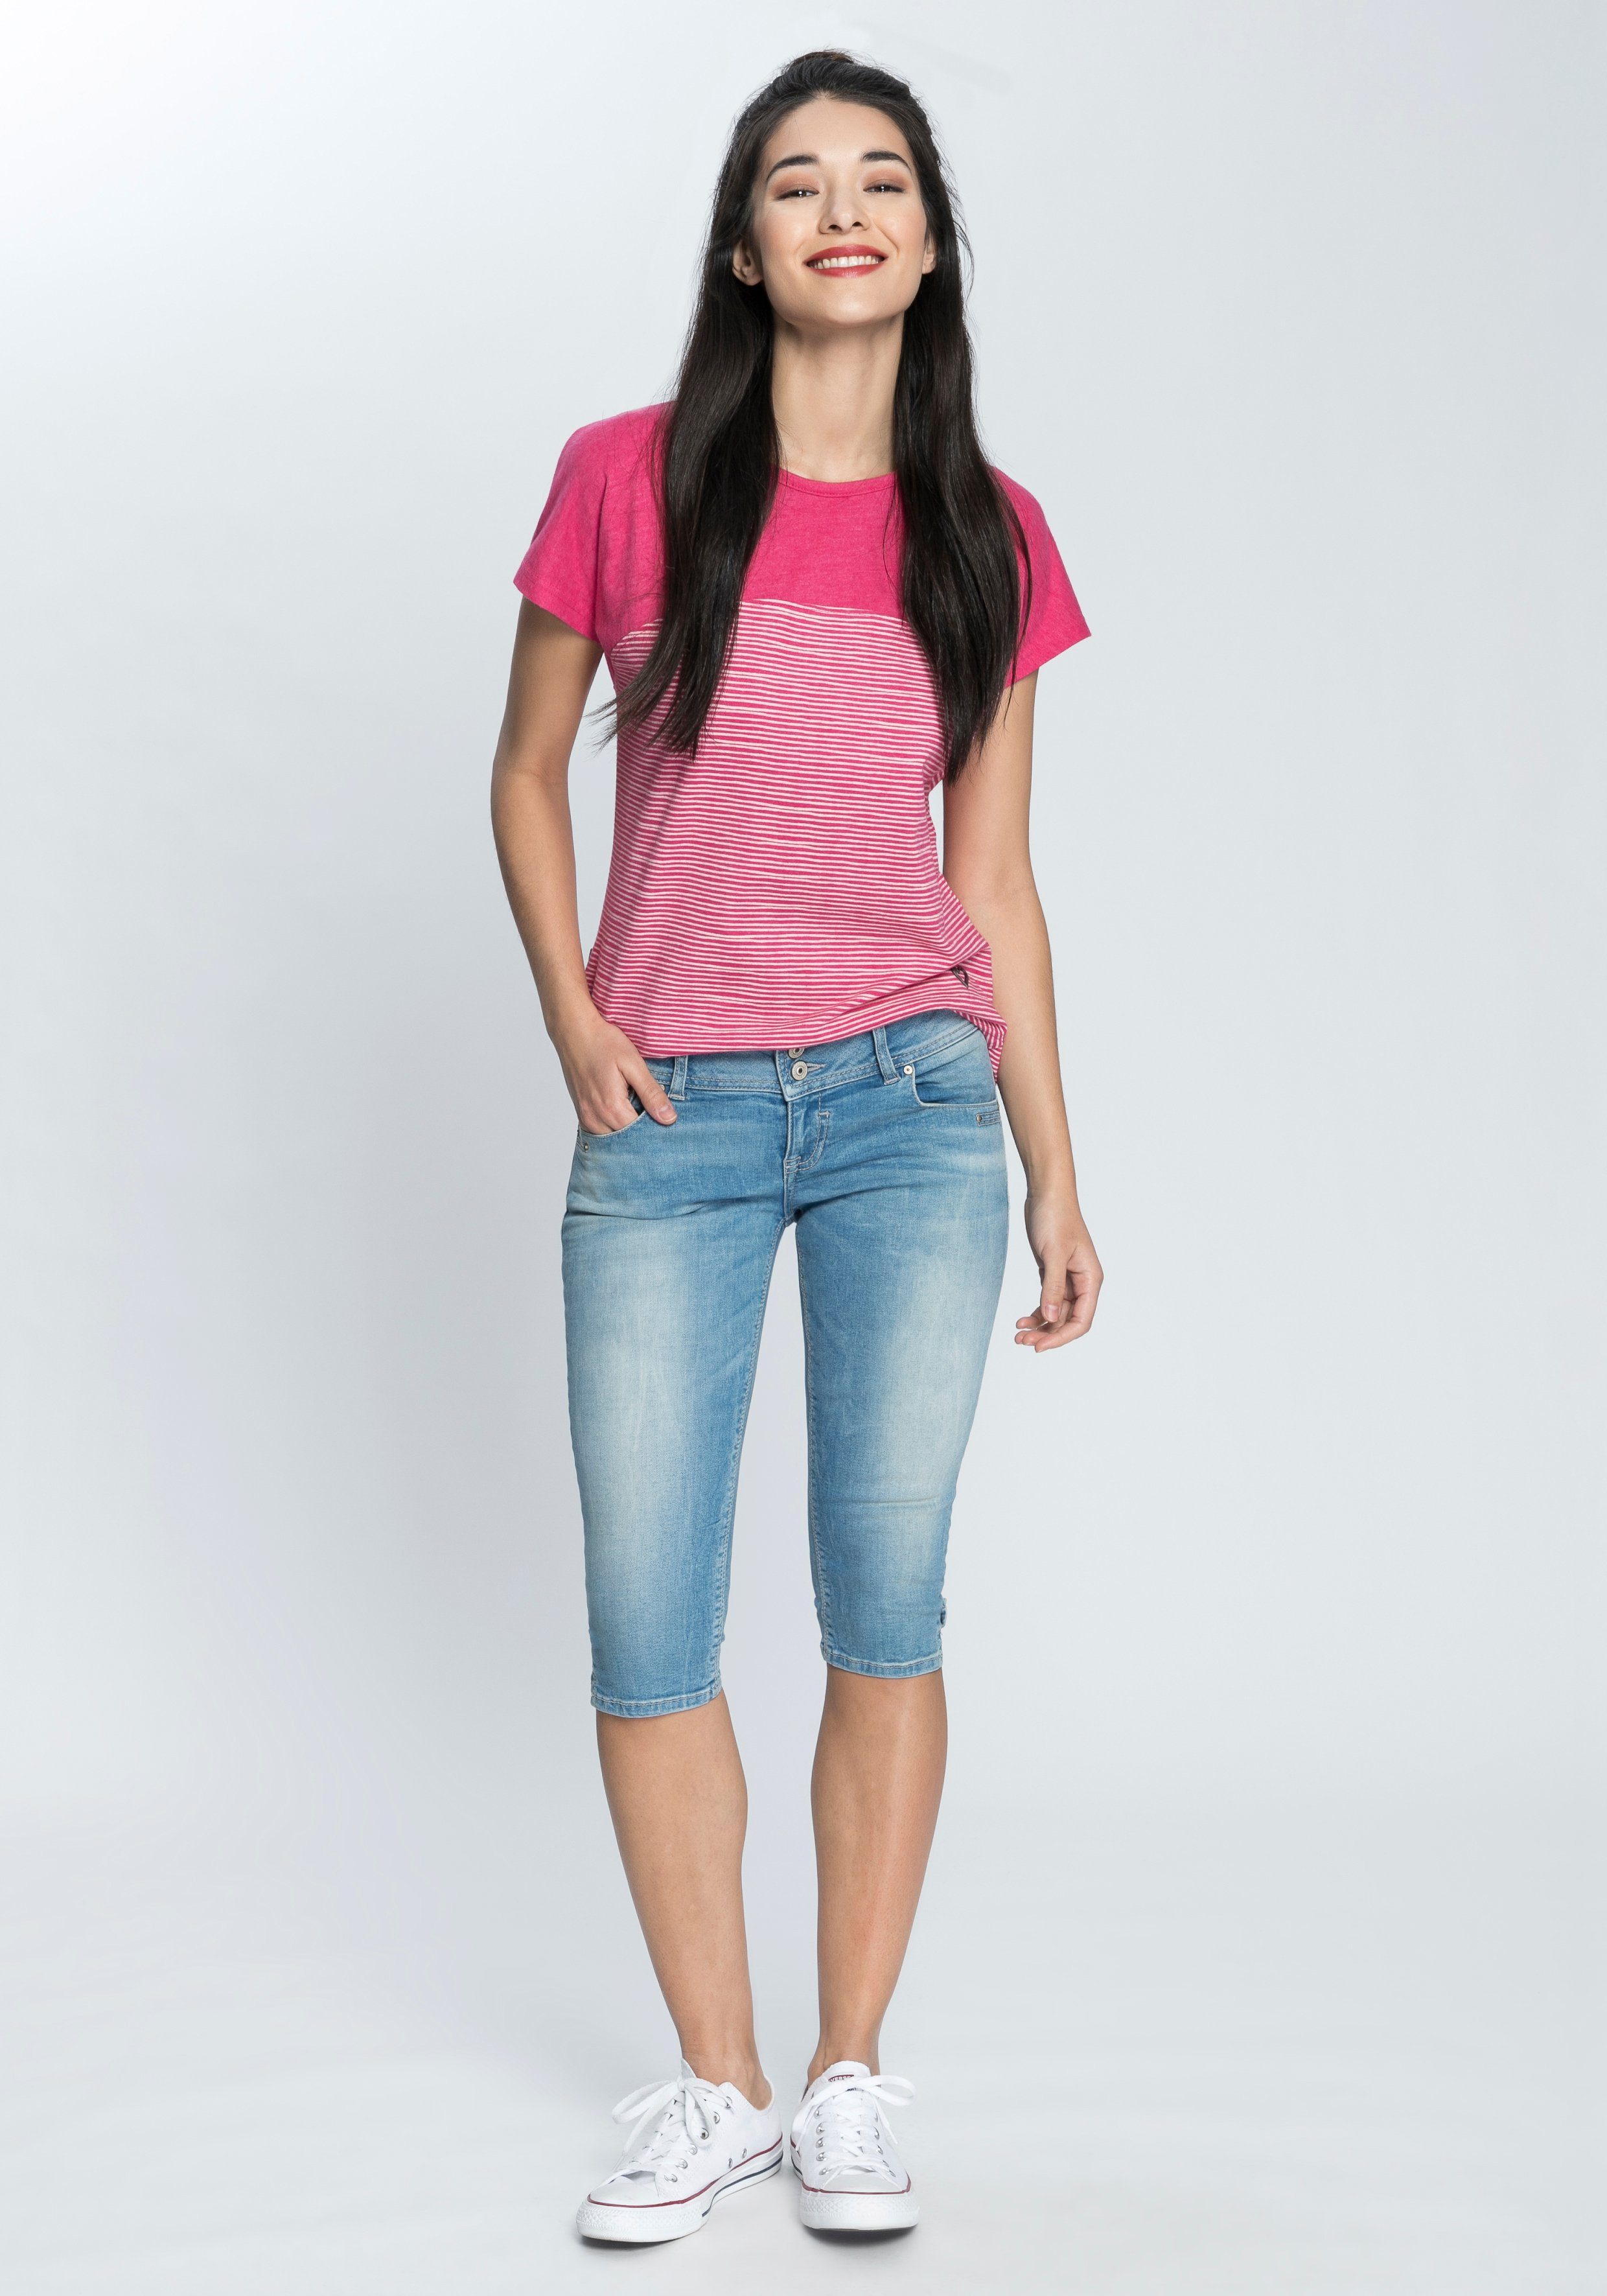 T-Shirt Musterprints Kickin Longshirt stripes Streifen-oder Alife & mit fuchsia trendy